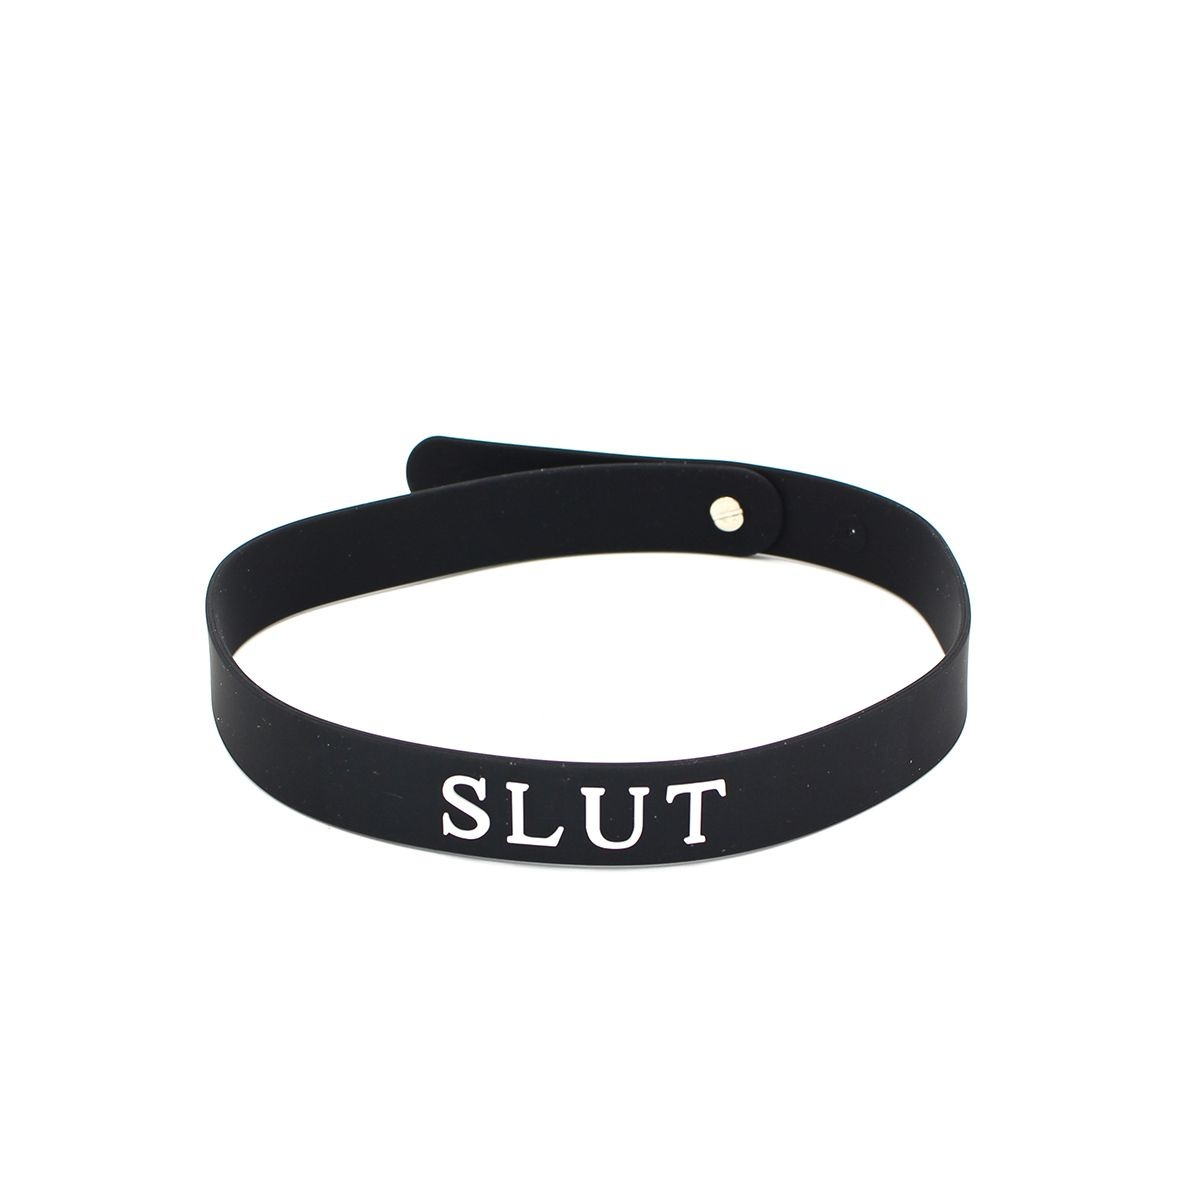 Collar Bitch Slut Slave Erotic Discount